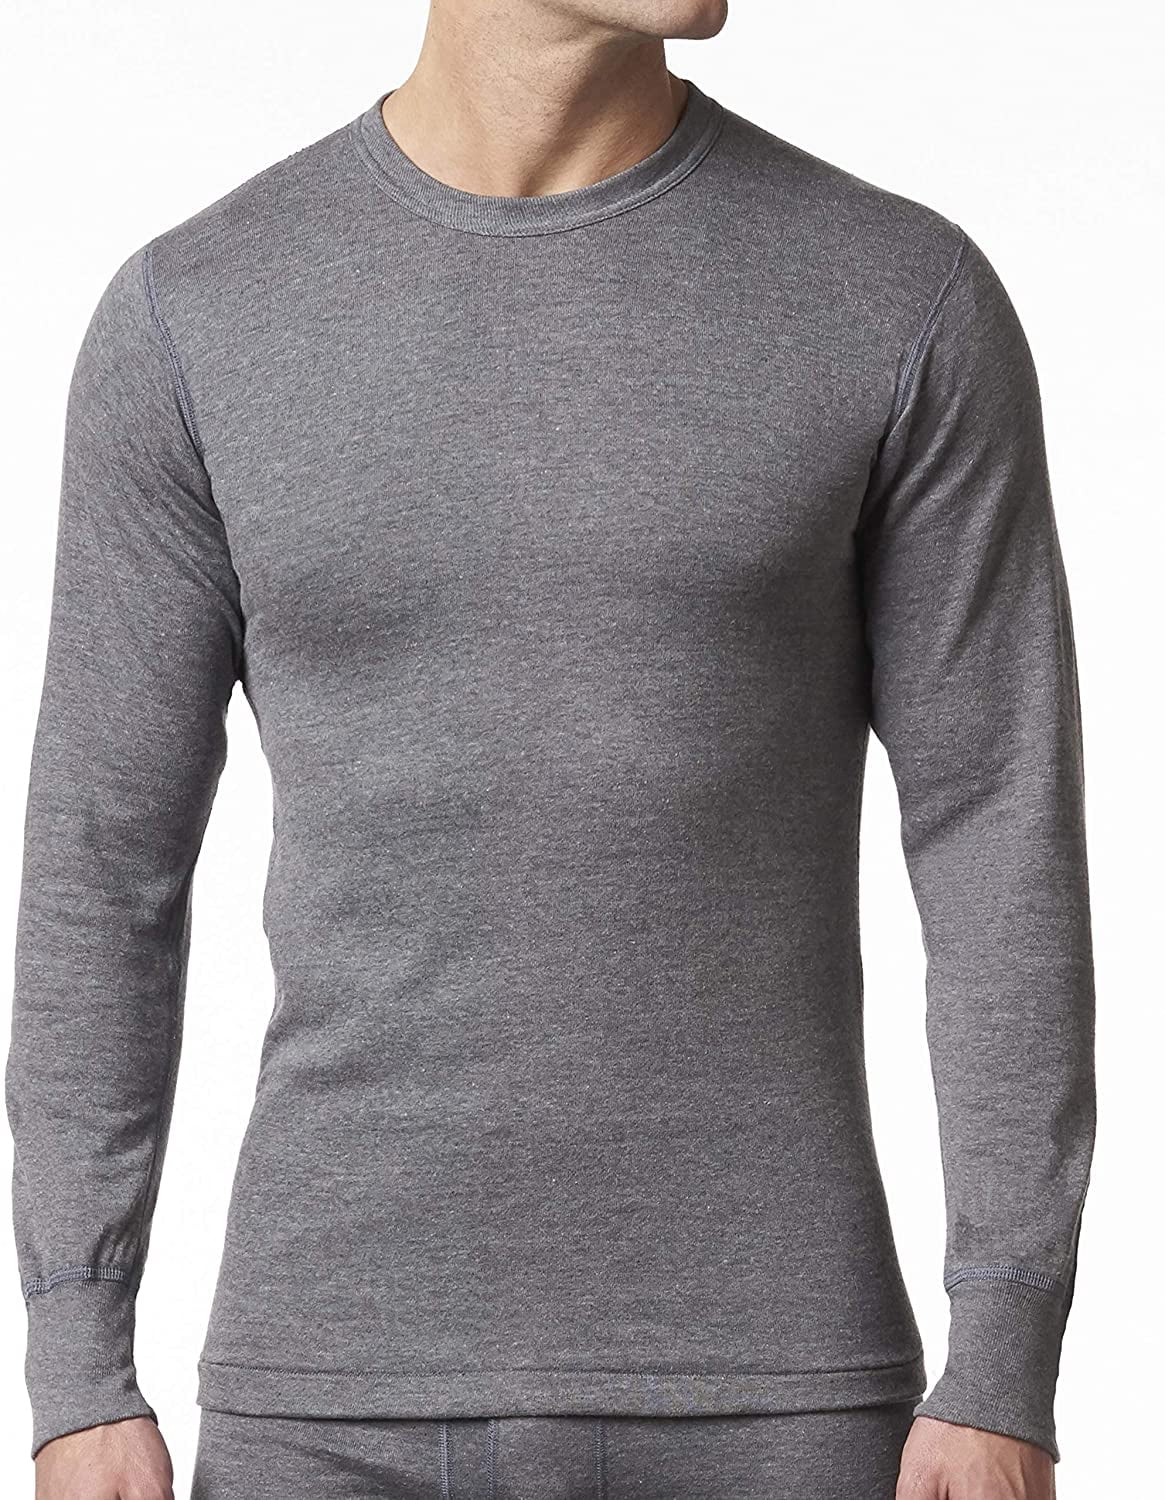 Dawwoti Men's Cotton T-Shirts Long-Sleeve Tops V-Neck Slimming Body Sweatshirt Plain Undershirt 